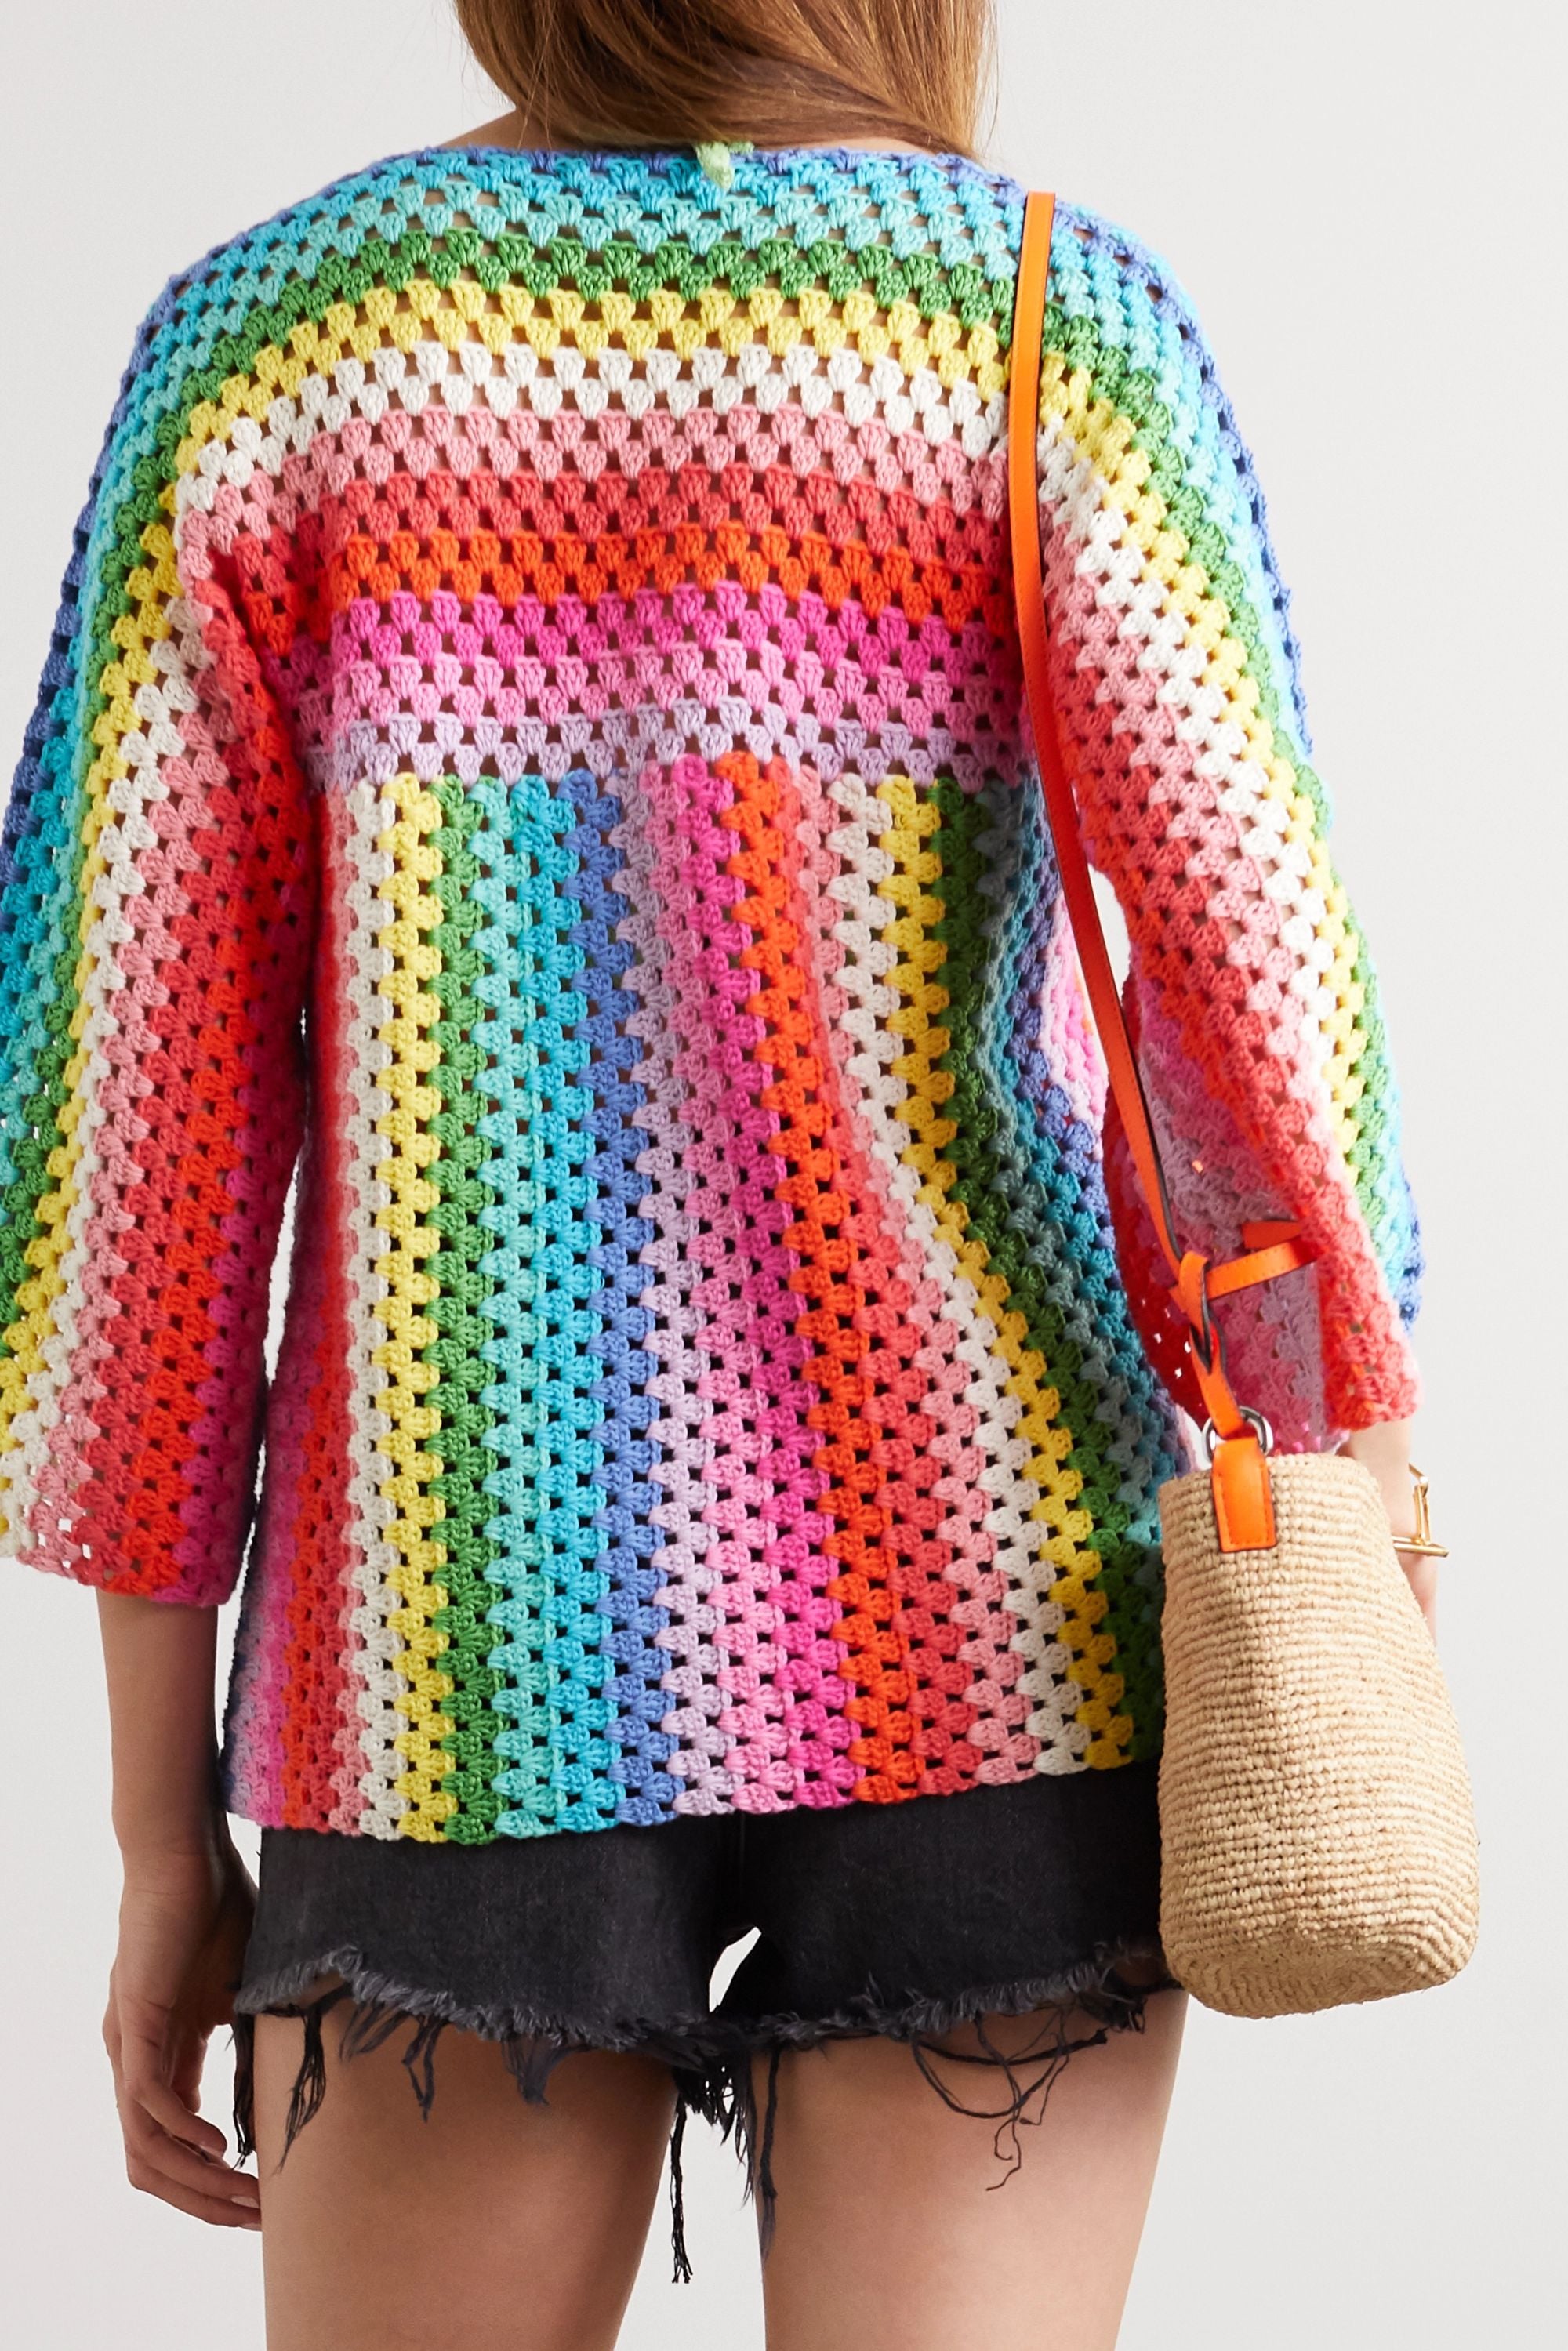 Designer of Harry Styles' Sweater Shared Pattern for TikTokers, Fans